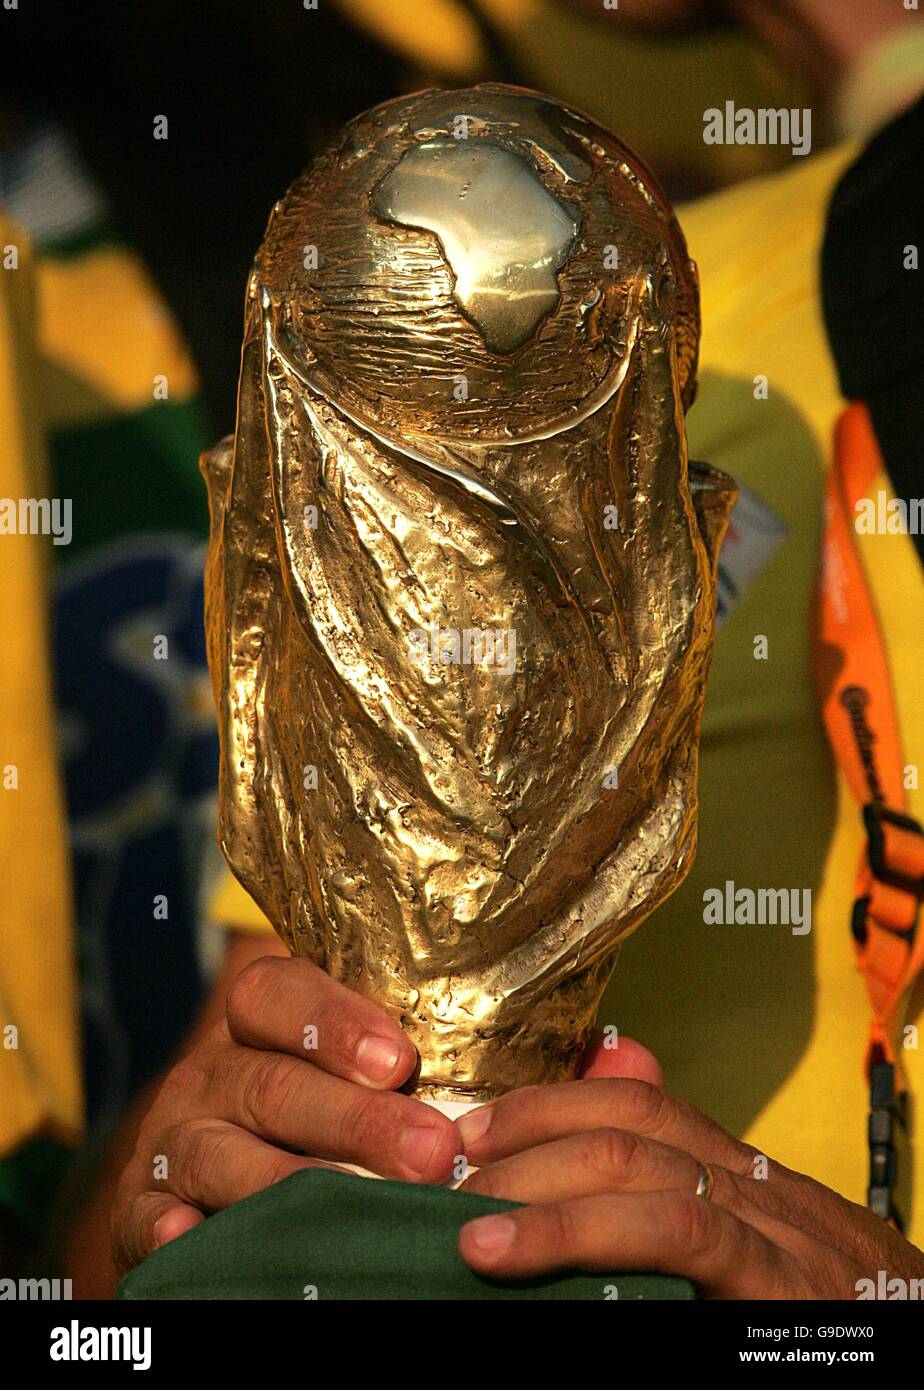 Soccer - 2006 FIFA World Cup Germany - Quarter Final - Brazil v France - Commerzbank Arena Stock Photo